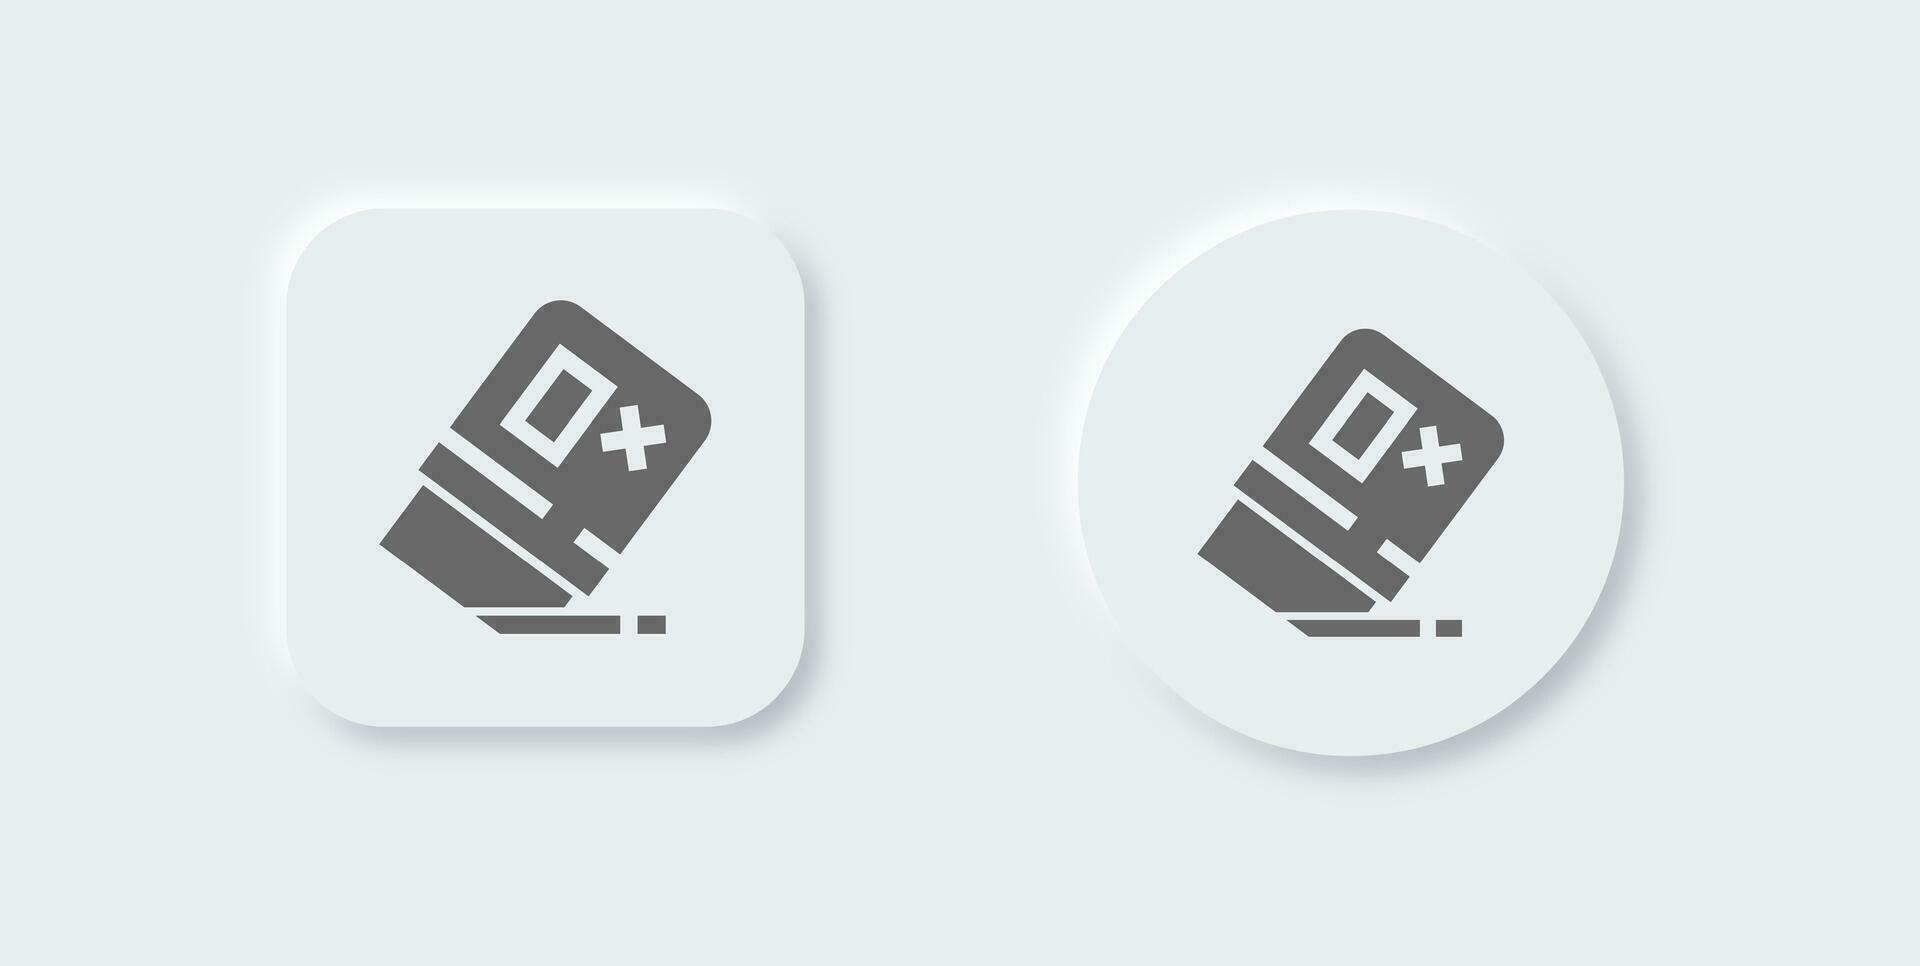 suddgummi fast ikon i neomorf design stil. torka ut tecken vektor illustration.